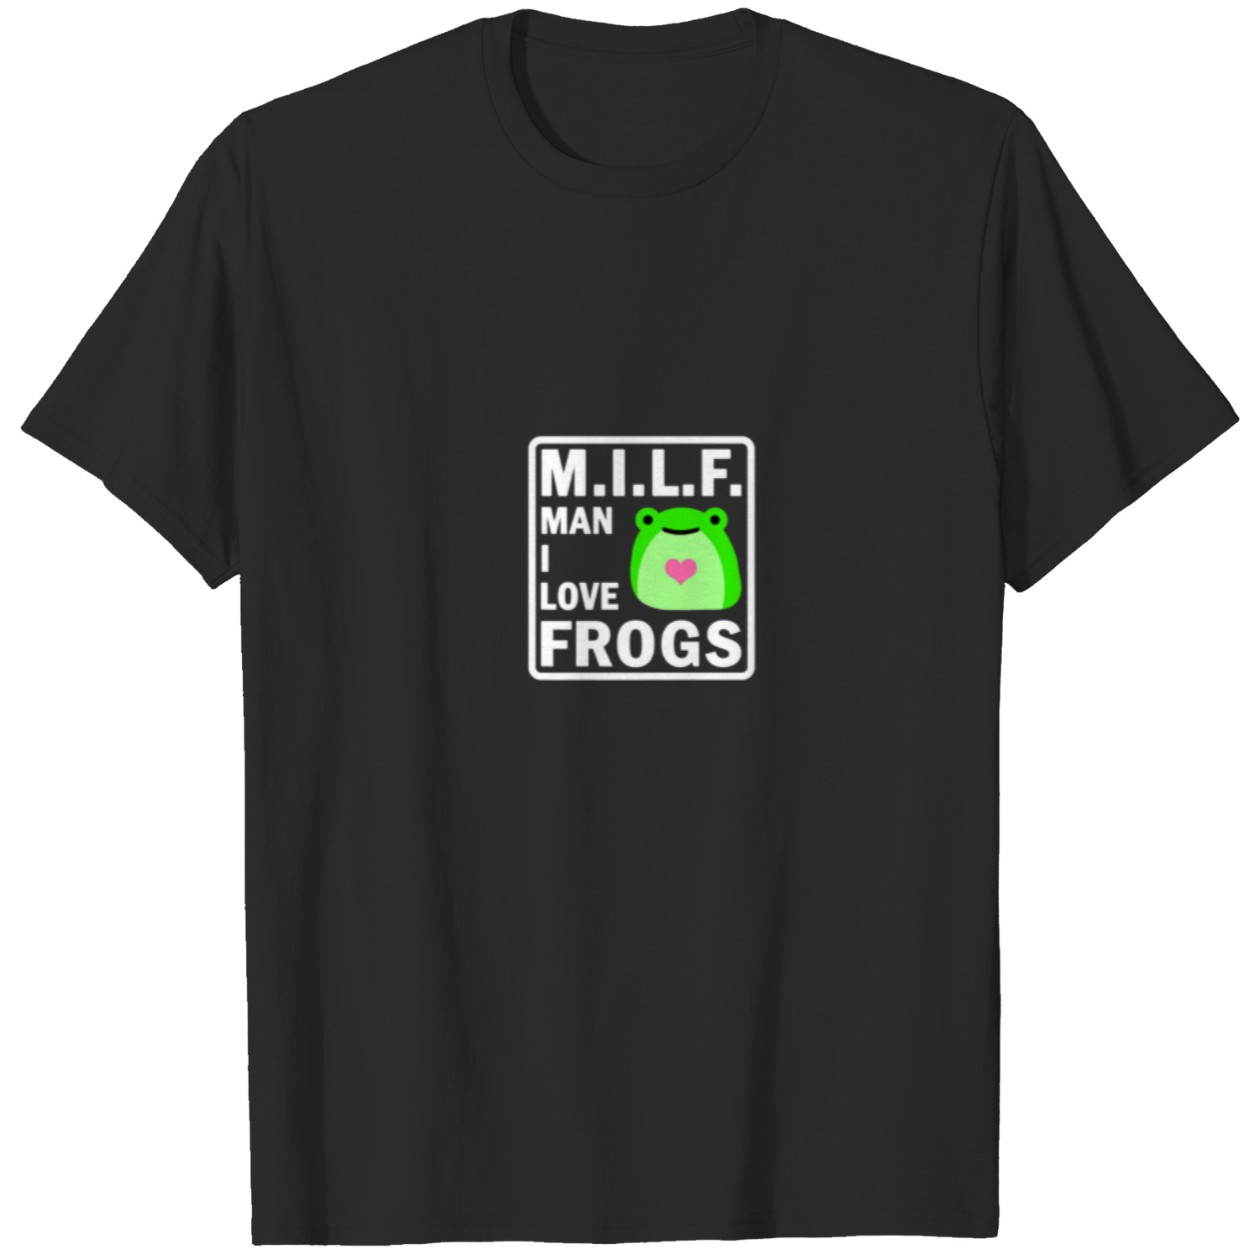 Man I Love Frogs Funny Kawaii Cute Graphic Tee T-Shirt DZT04